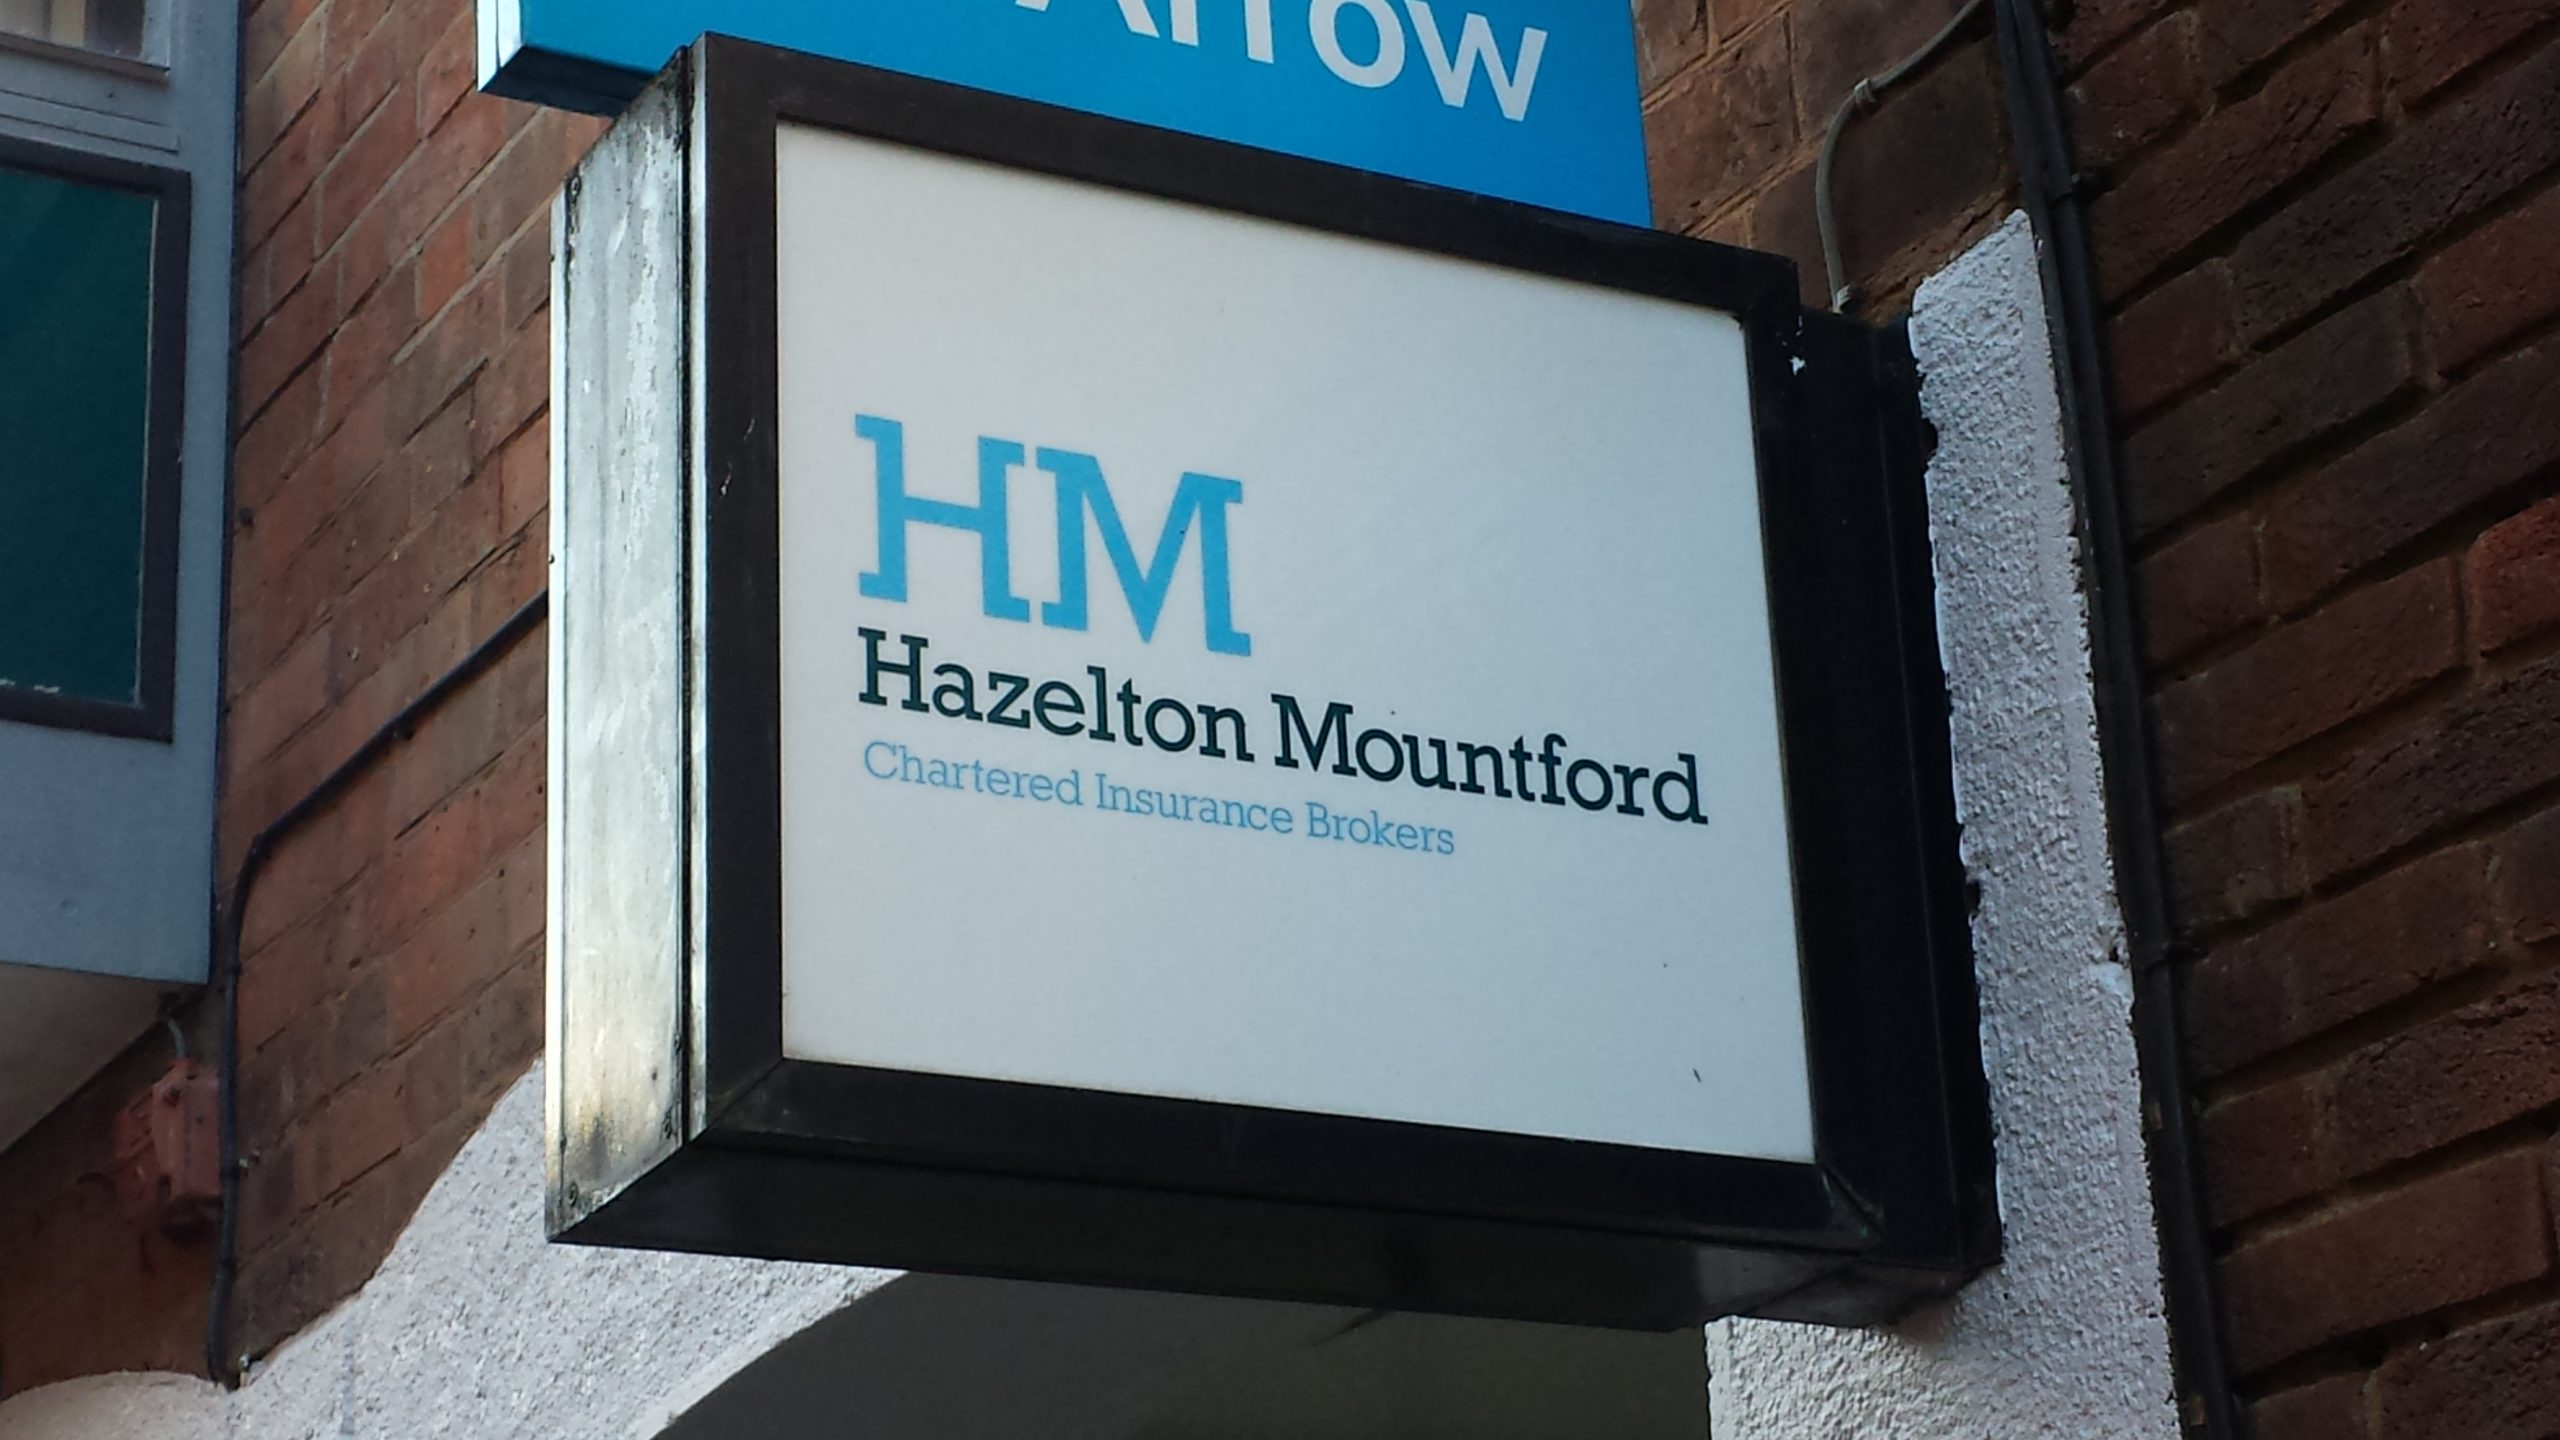 Job opportunity – seeking a claims handler to join Hazelton Mountford